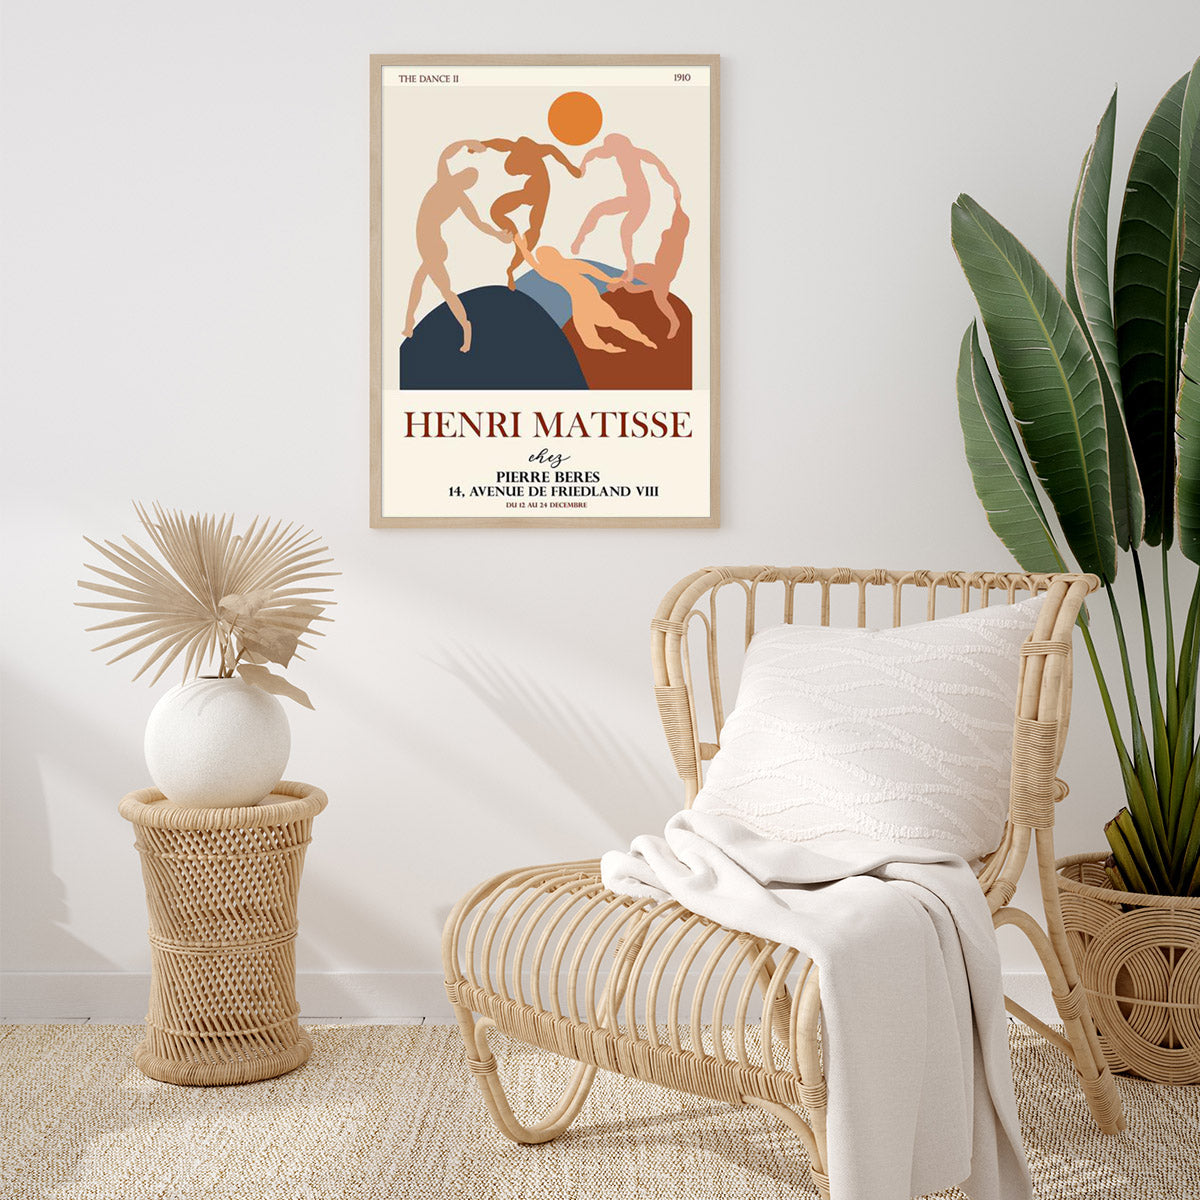 70cmx100cm Dancing by Henri Matisse Wood Frame Canvas Wall Art